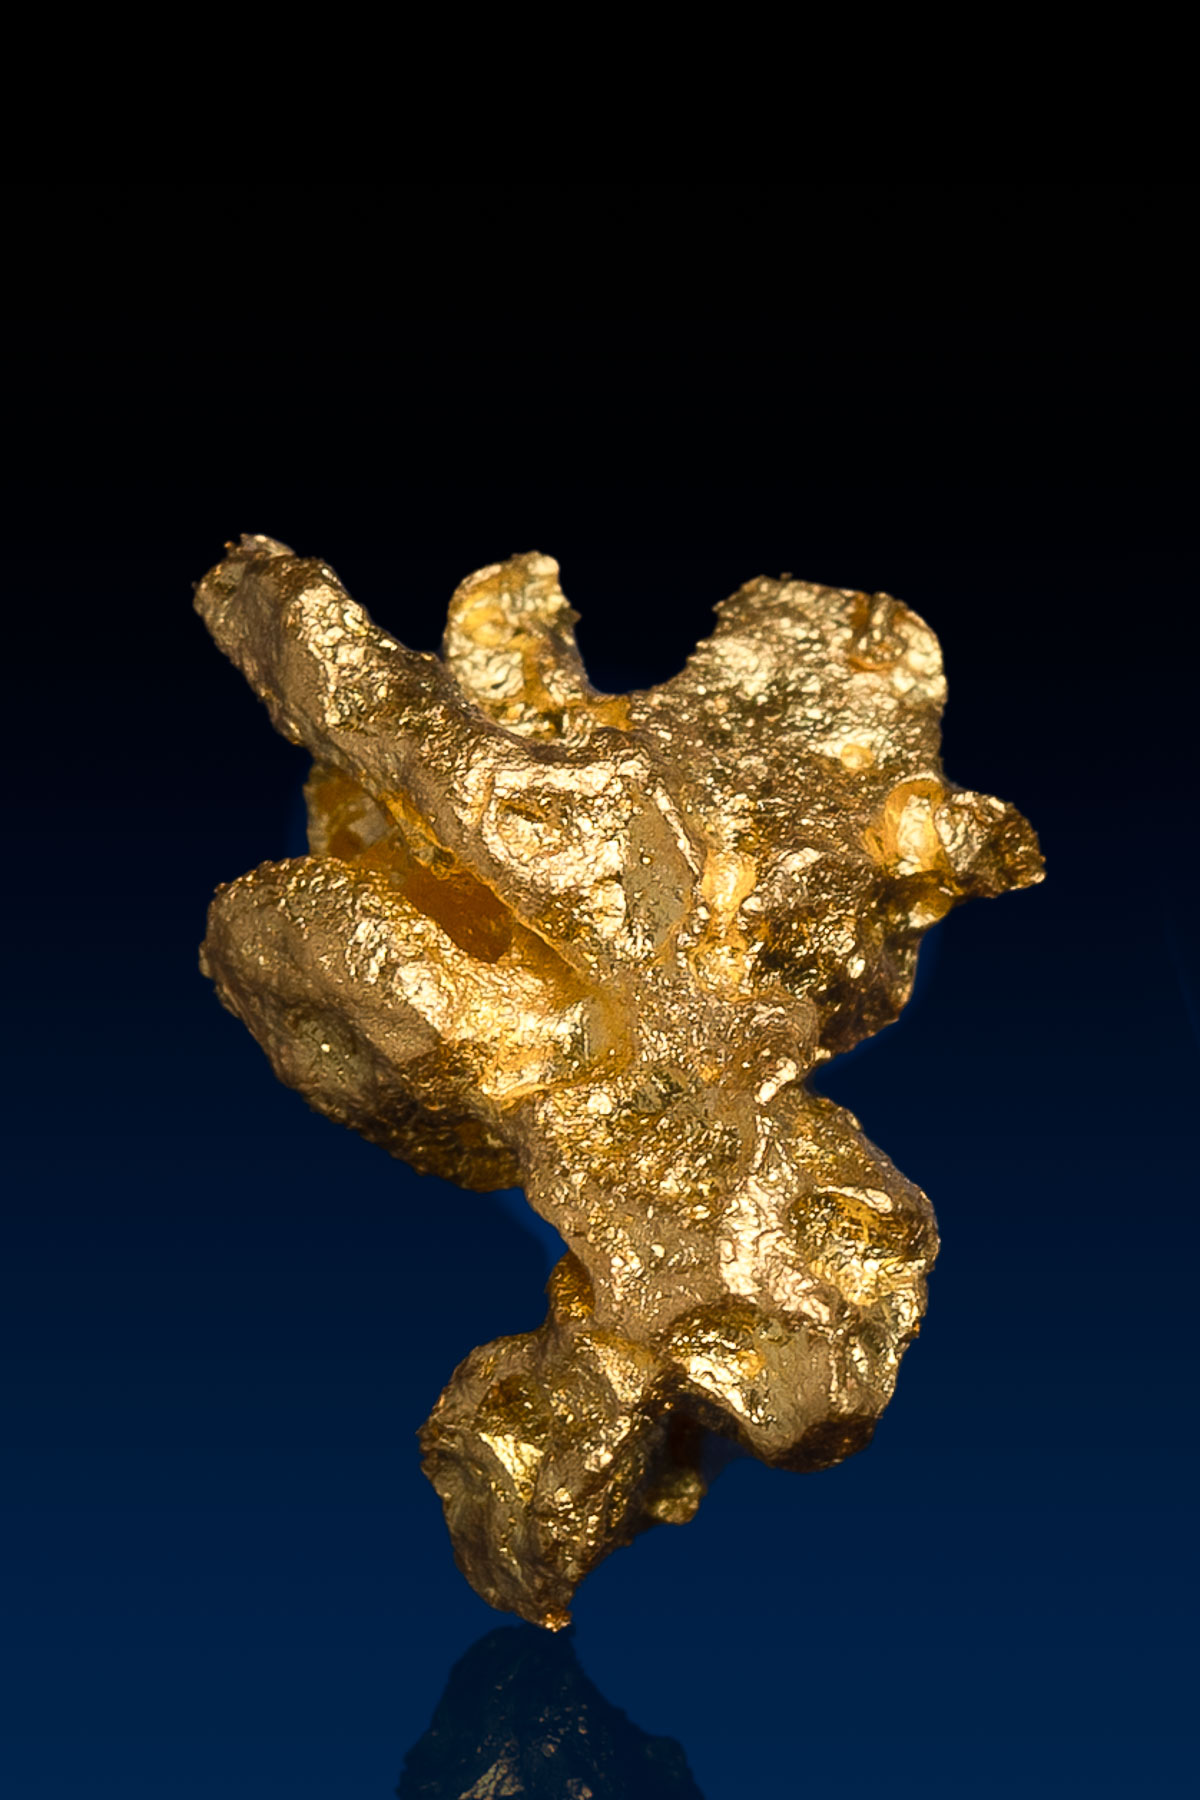 Fascinating Shaped Australian Natural Gold Nugget - 2.11 grams